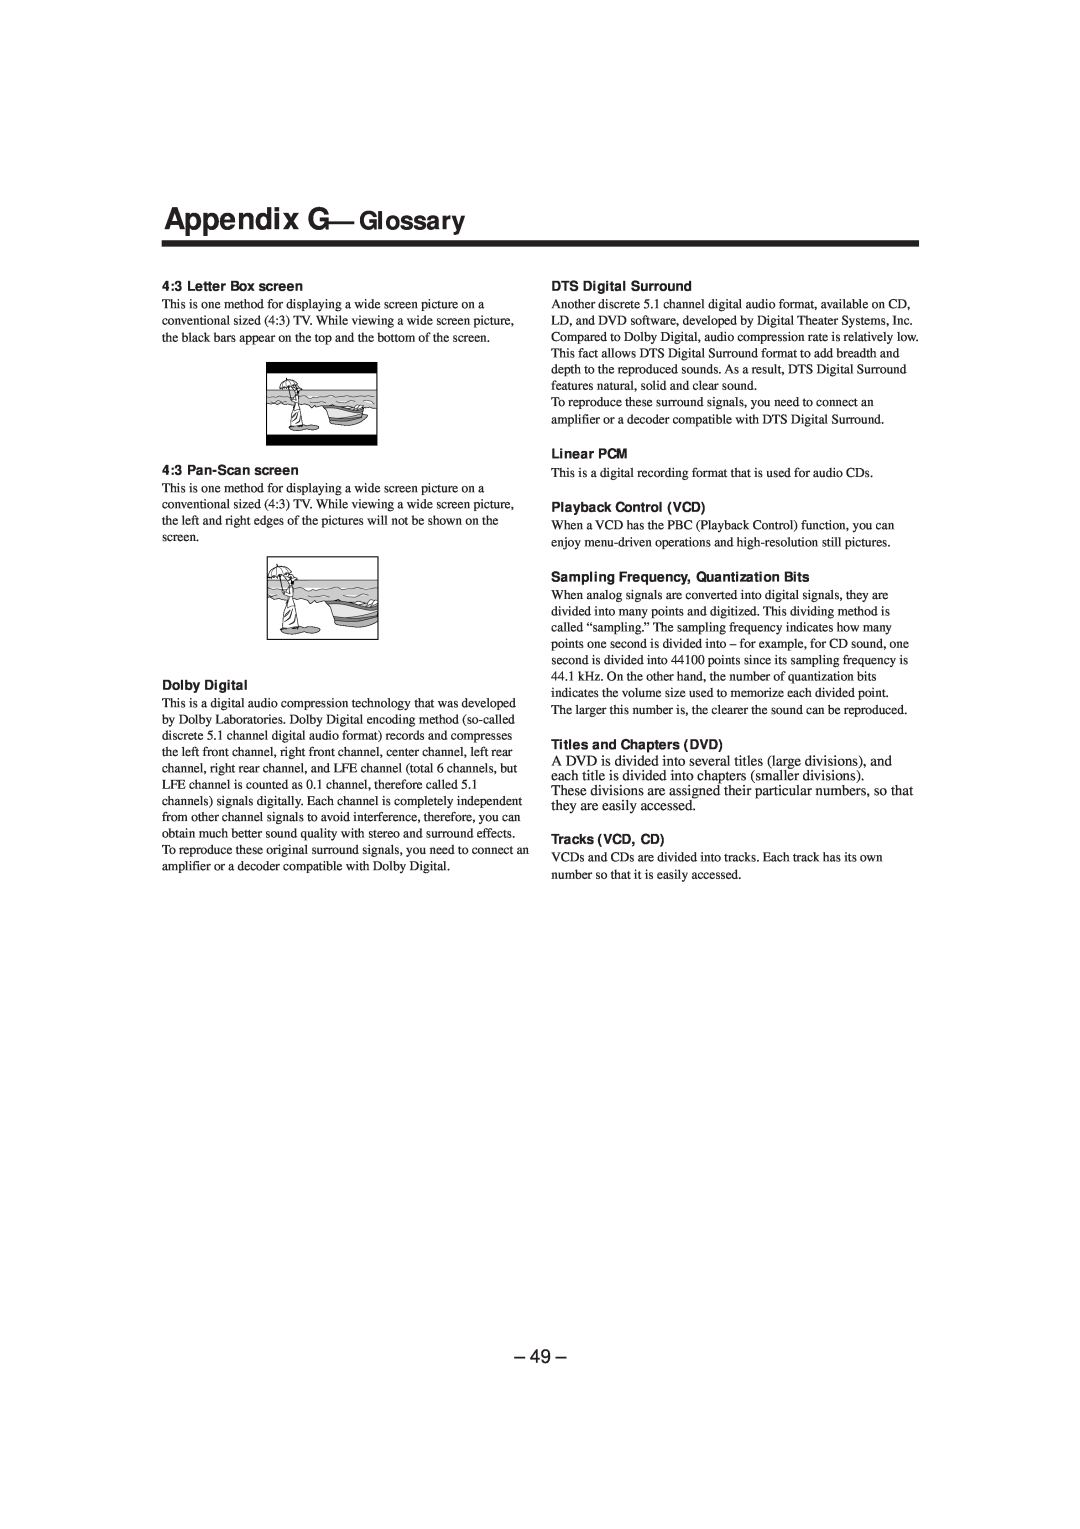 JVC MX-DVA9 manual Appendix G—Glossary, 49, 4:3 Letter Box screen, 4:3 Pan-Scanscreen, DTS Digital Surround, Linear PCM 